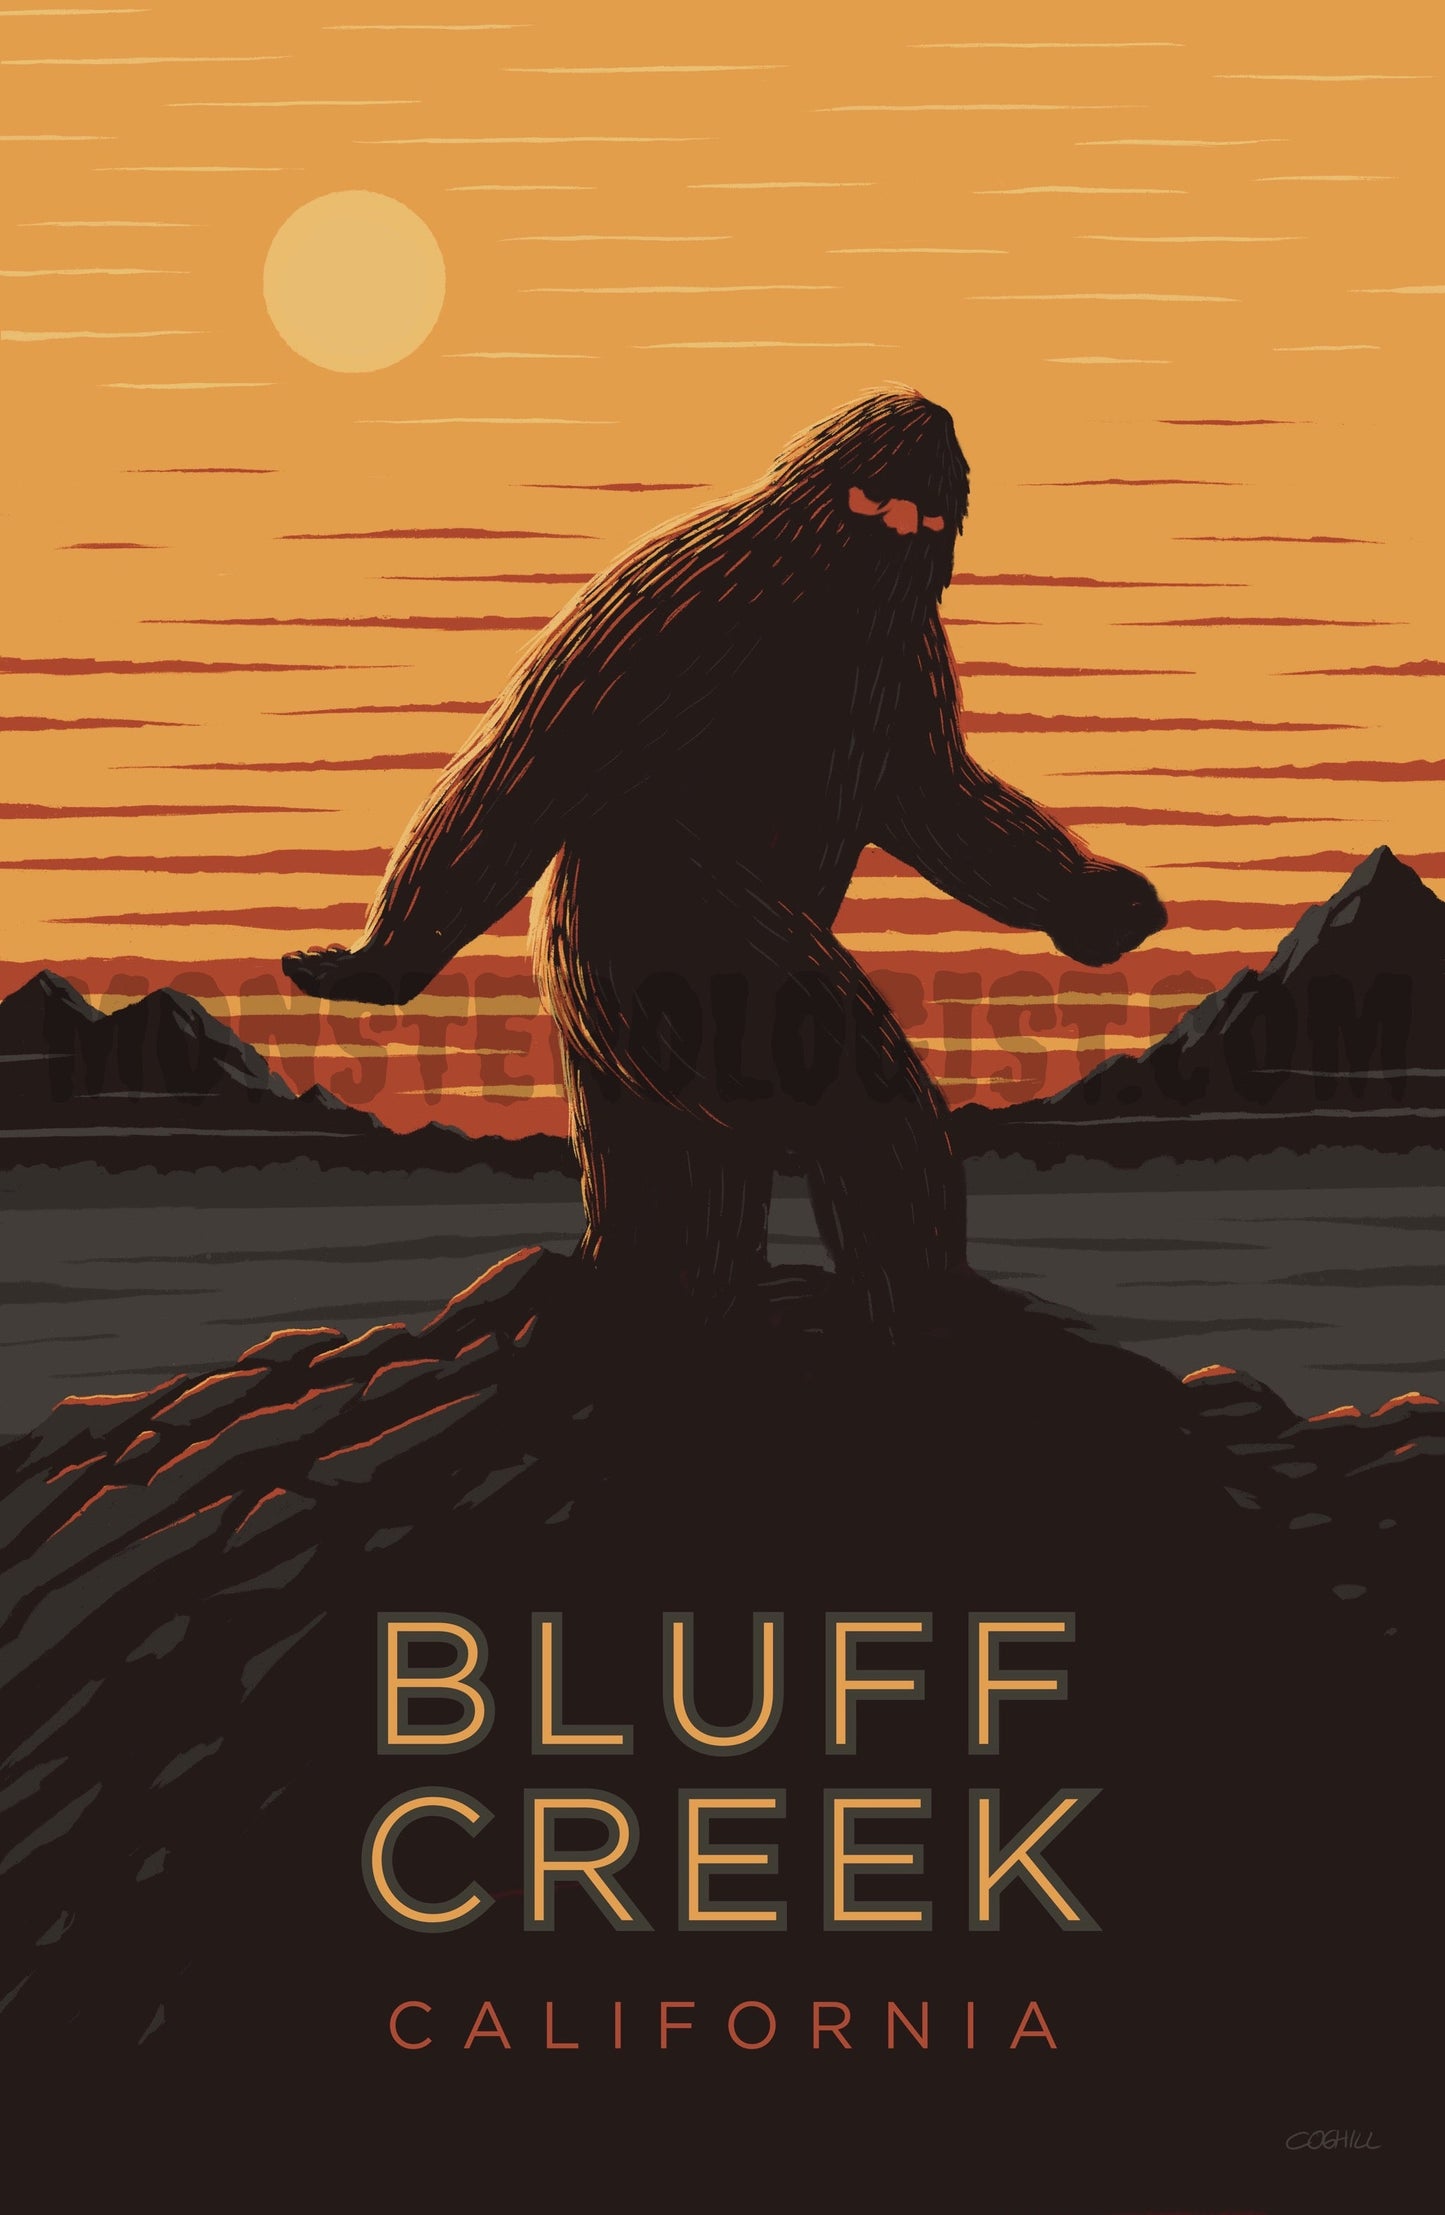 Bluff Creek, California Bigfoot vintage travel poster by Monsterologist.